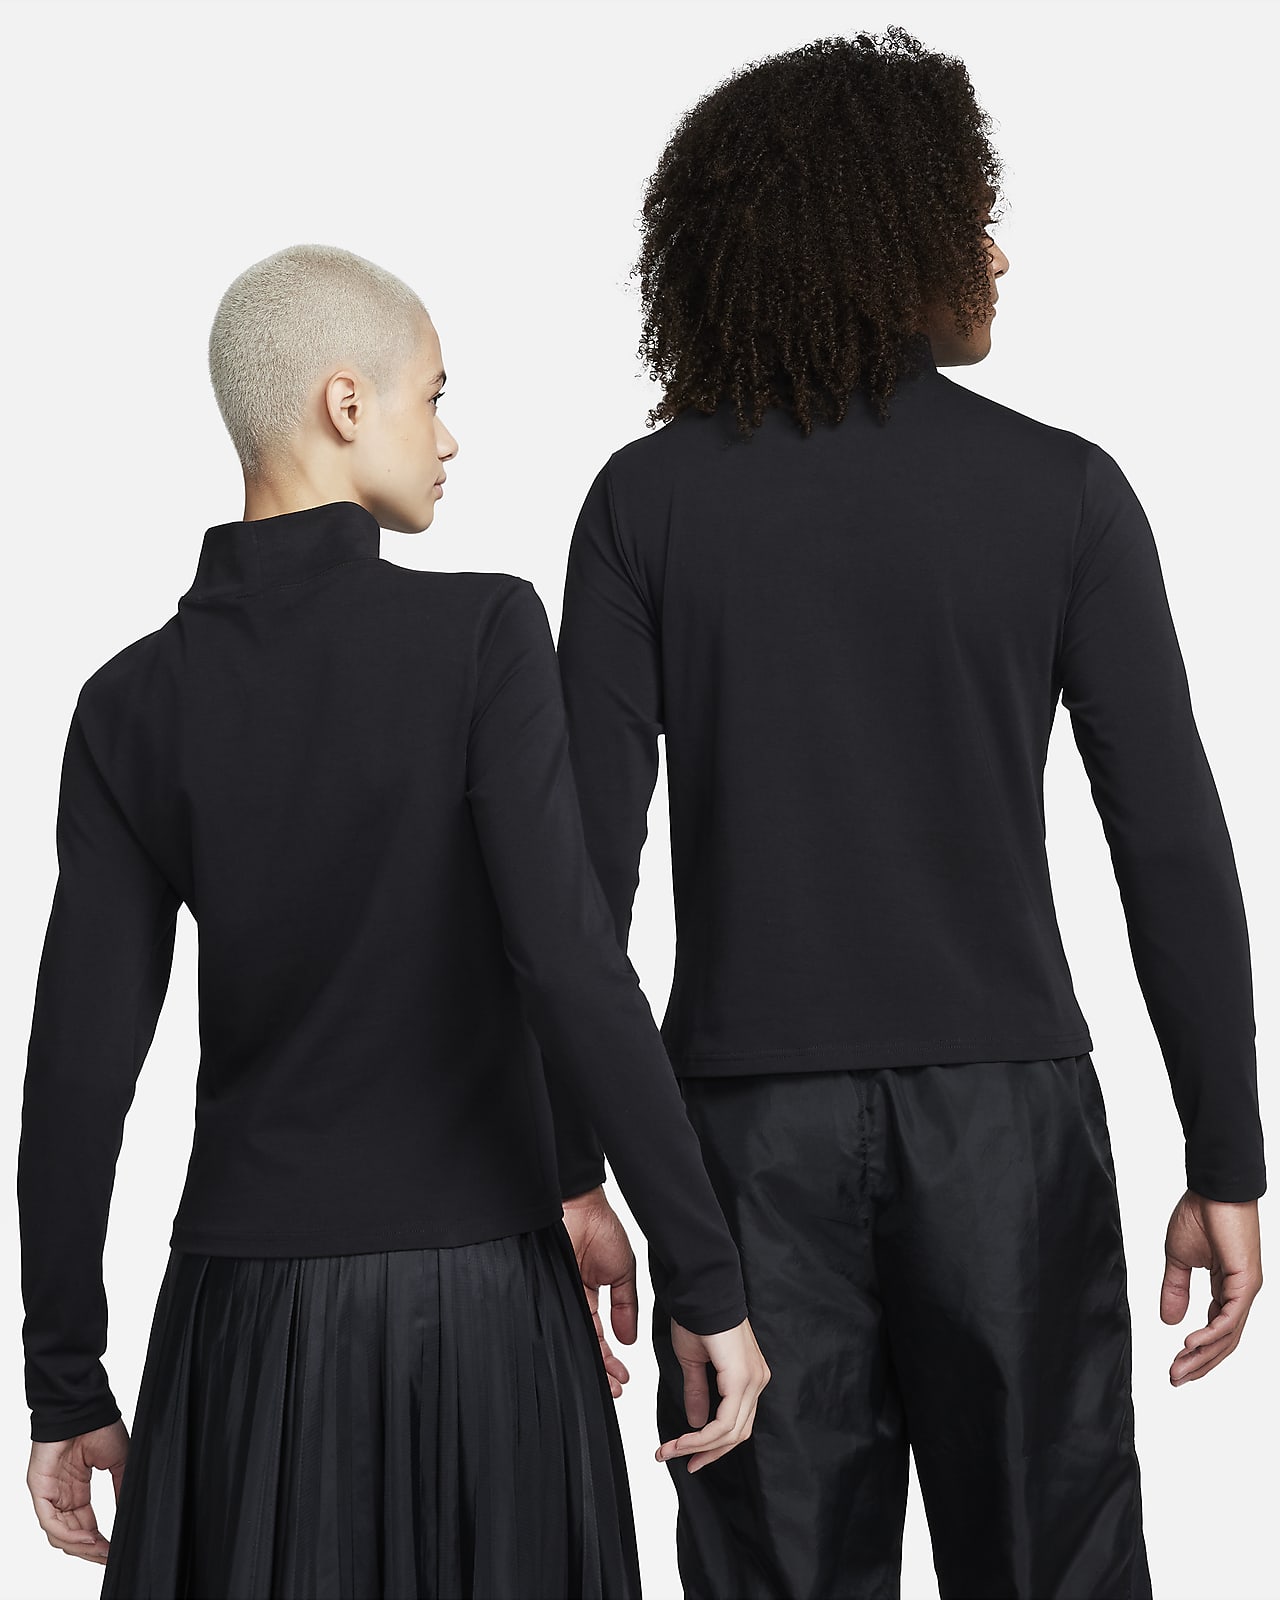 Nike Sportswear Collection Essentials Women's Long-Sleeve Mock Top.